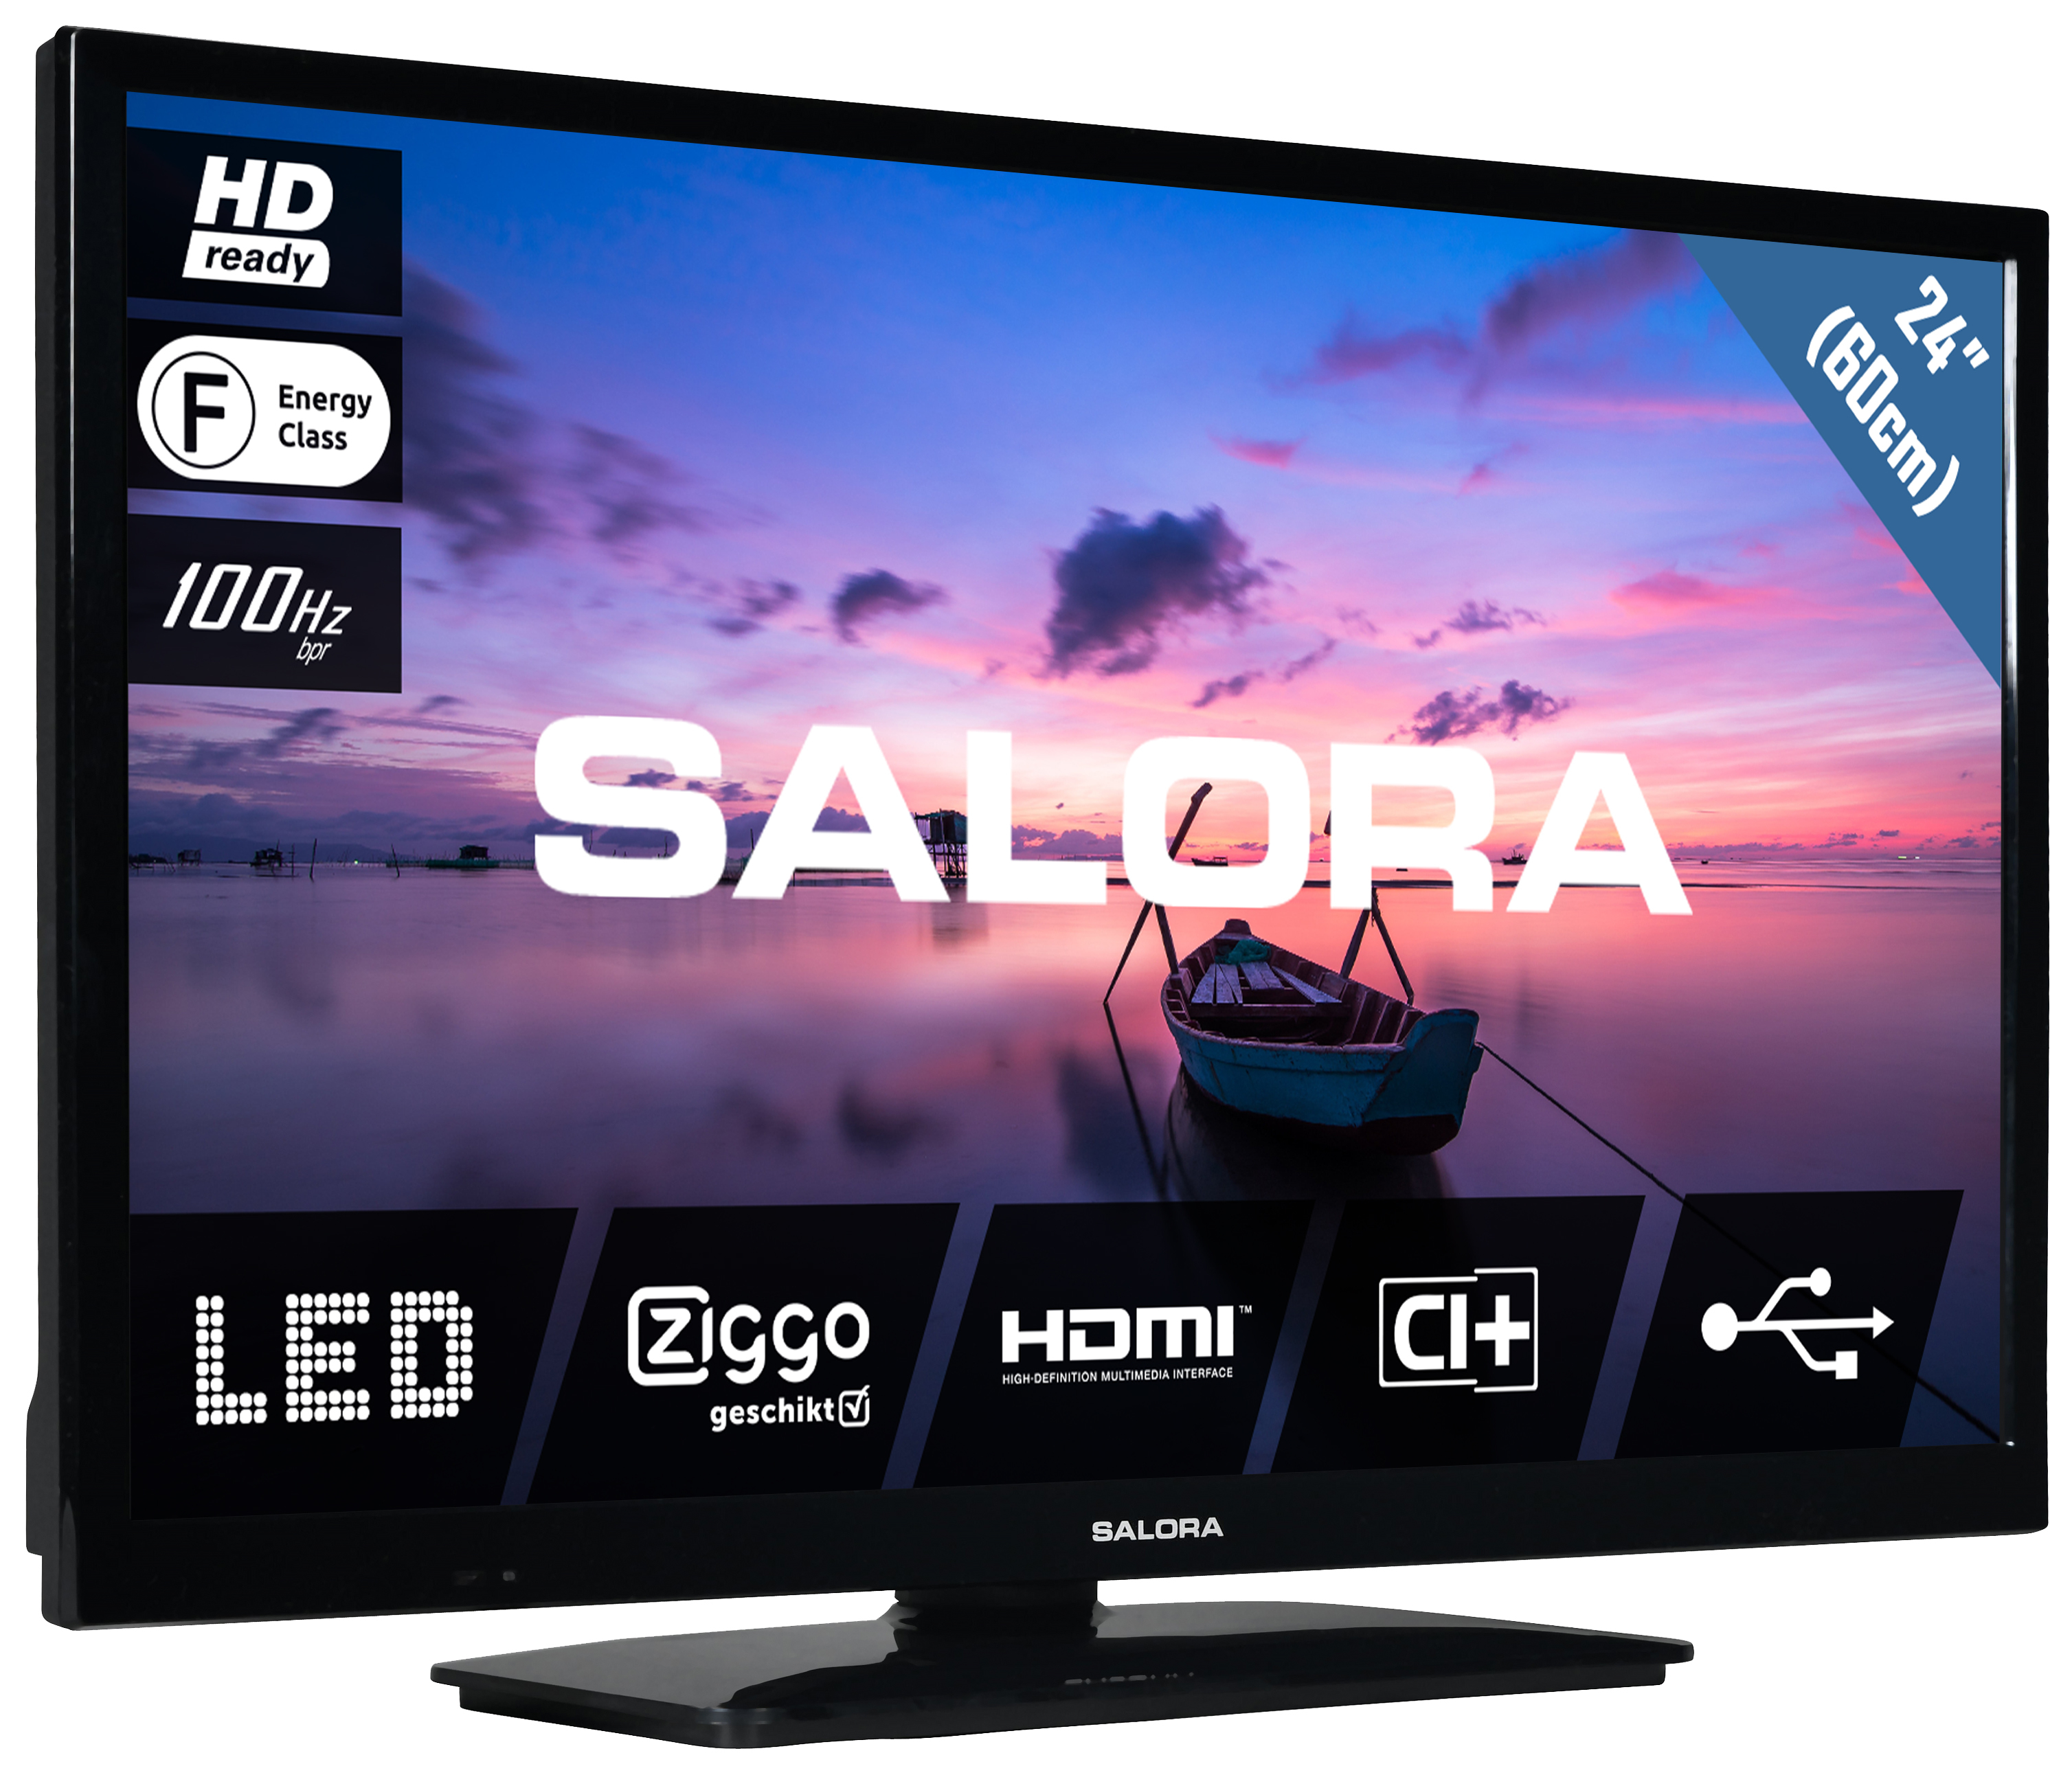 SALORA 24HDB6505 - 24 Zoll LED 61 Zoll cm, 2022 HD ready - / TV LED - HD-ready) (24